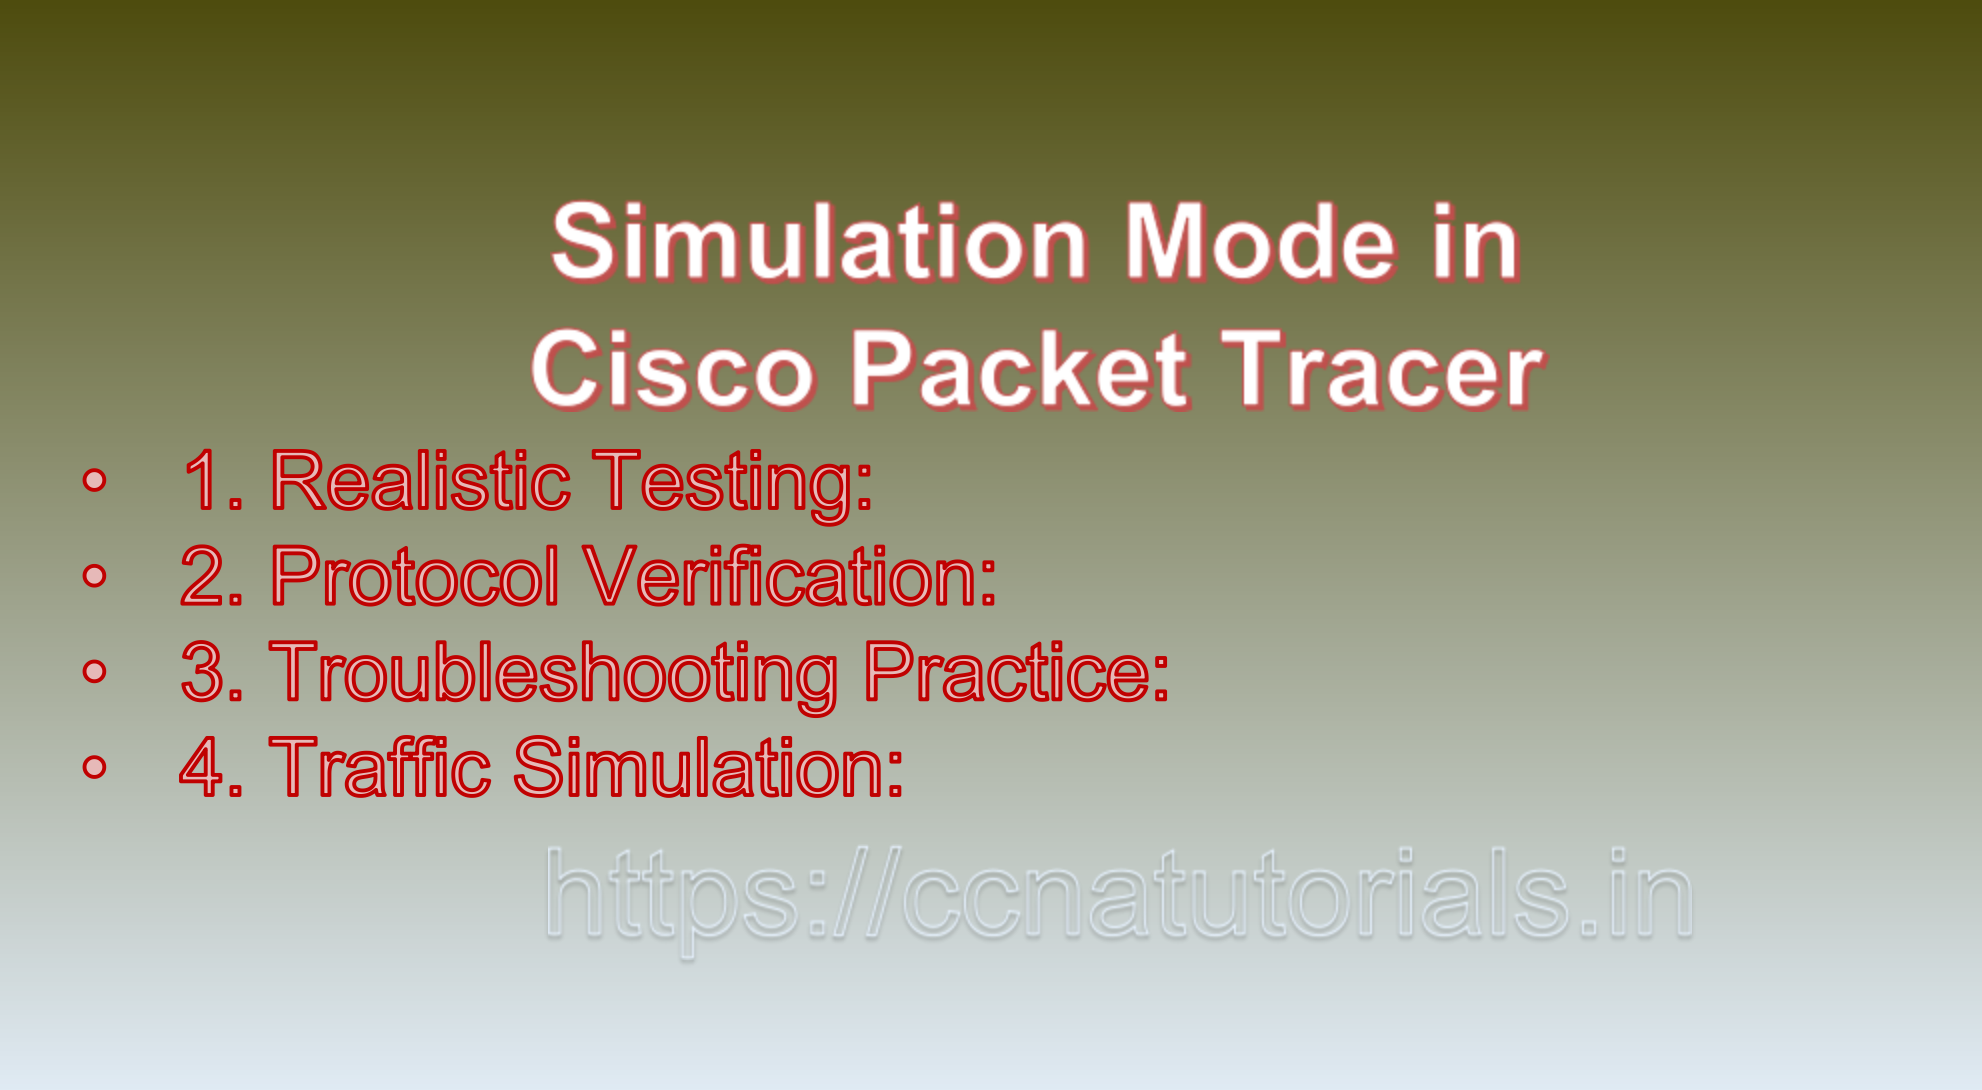 Simulation Mode in Cisco Packet Tracer, ccna, ccna tutorials